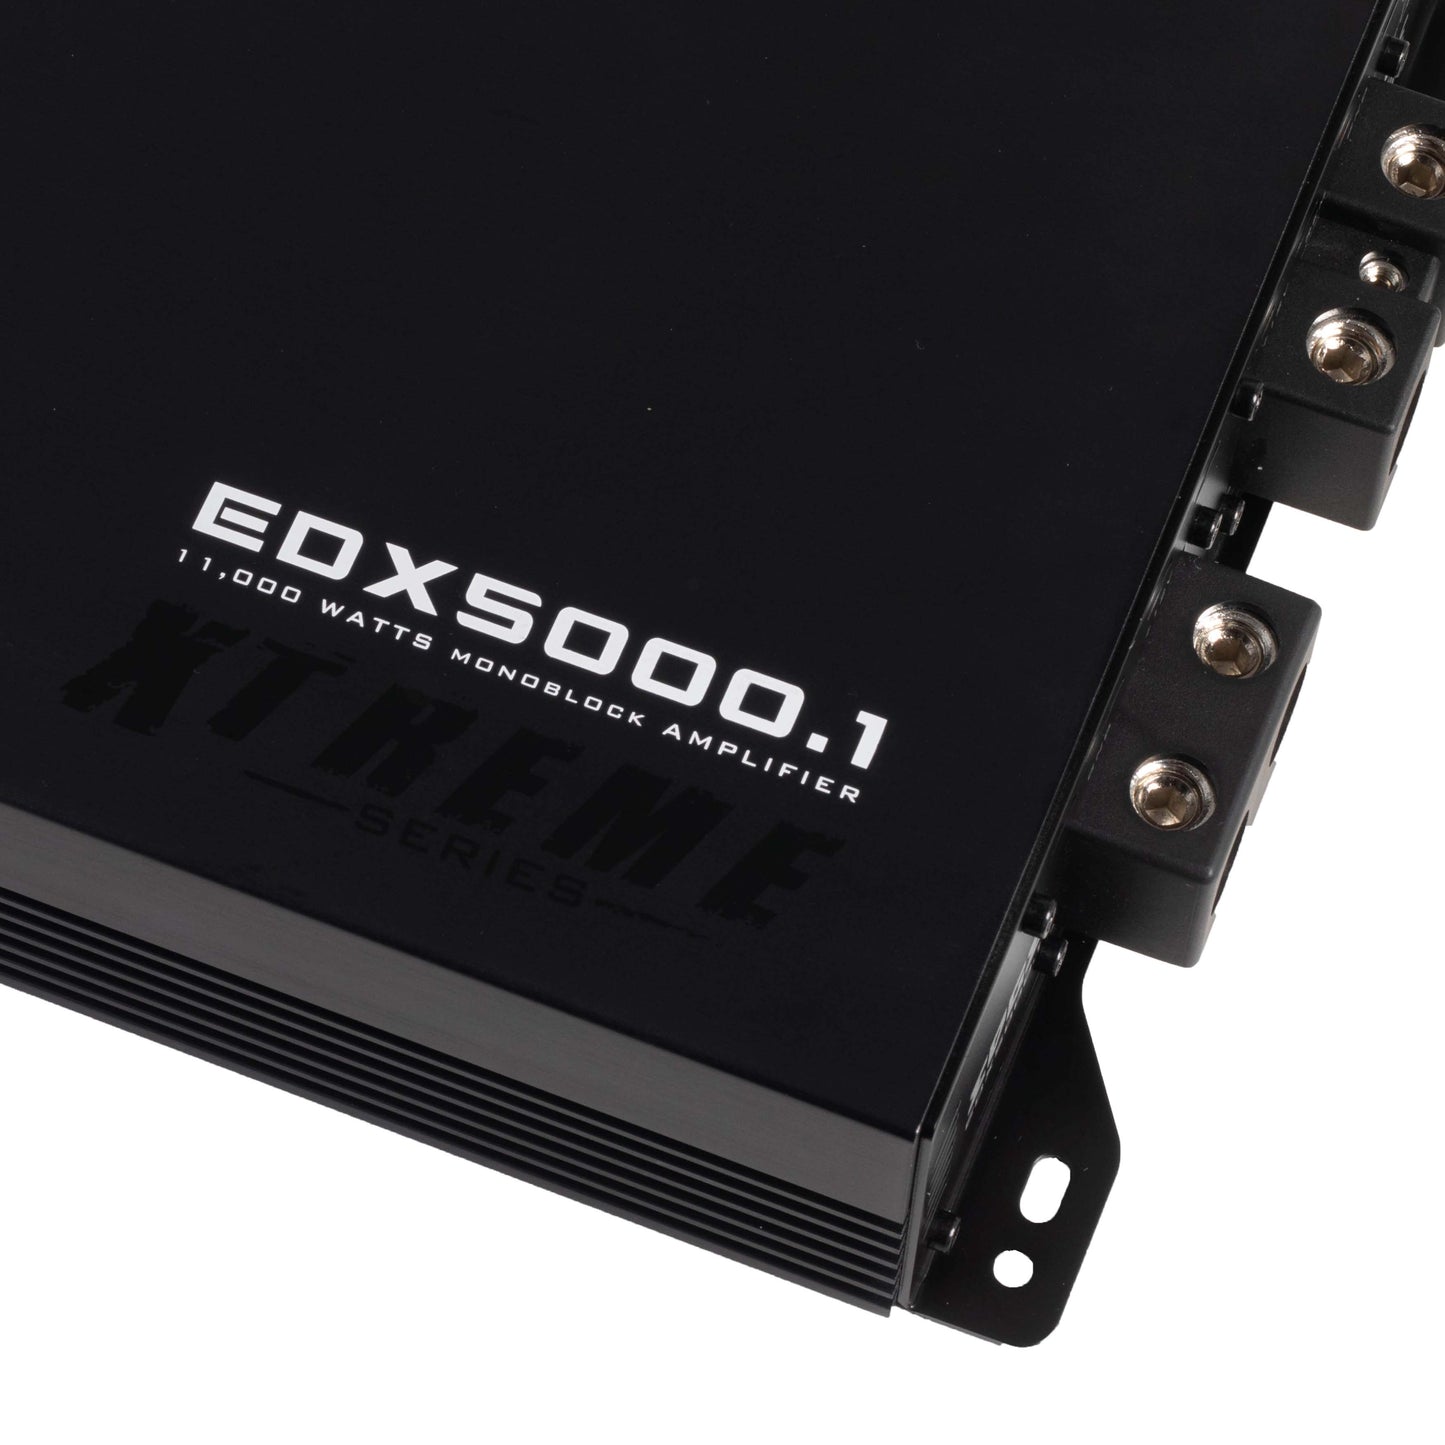 EDX5000.1D-E2 | EDGE Xtreme Series Monoblock 11000 watts Amplifier